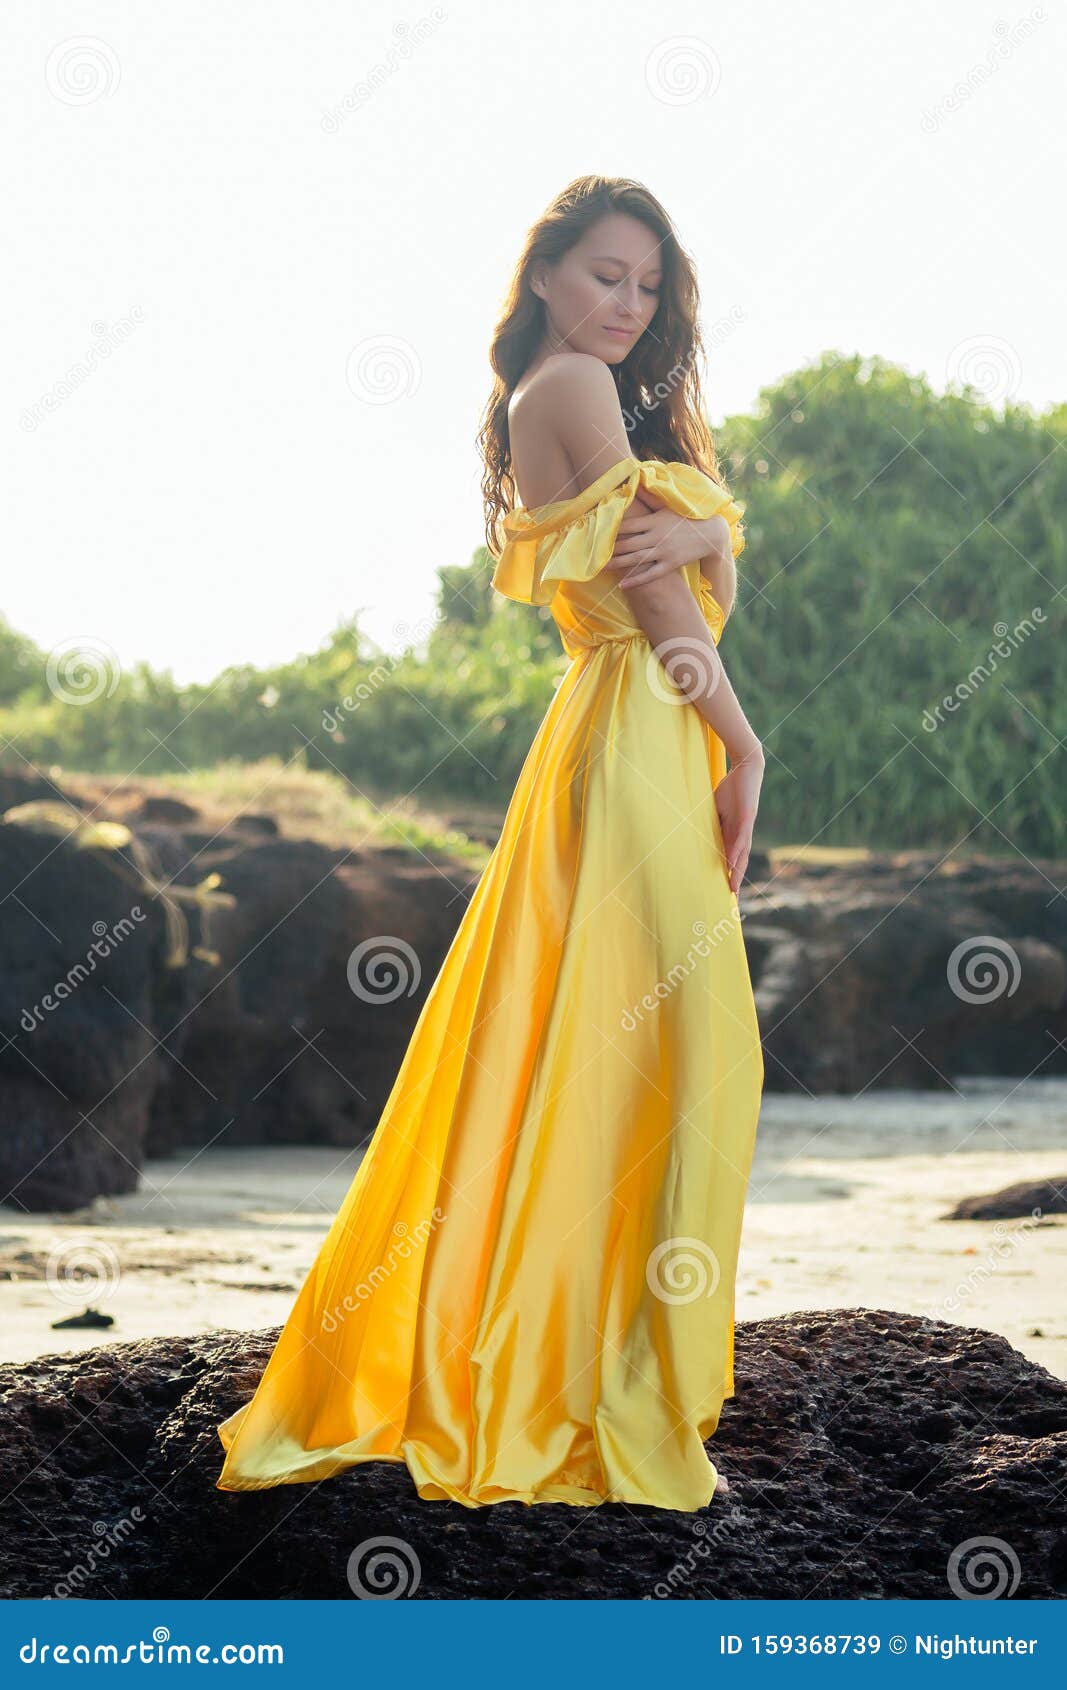 beautiful flowing dresses